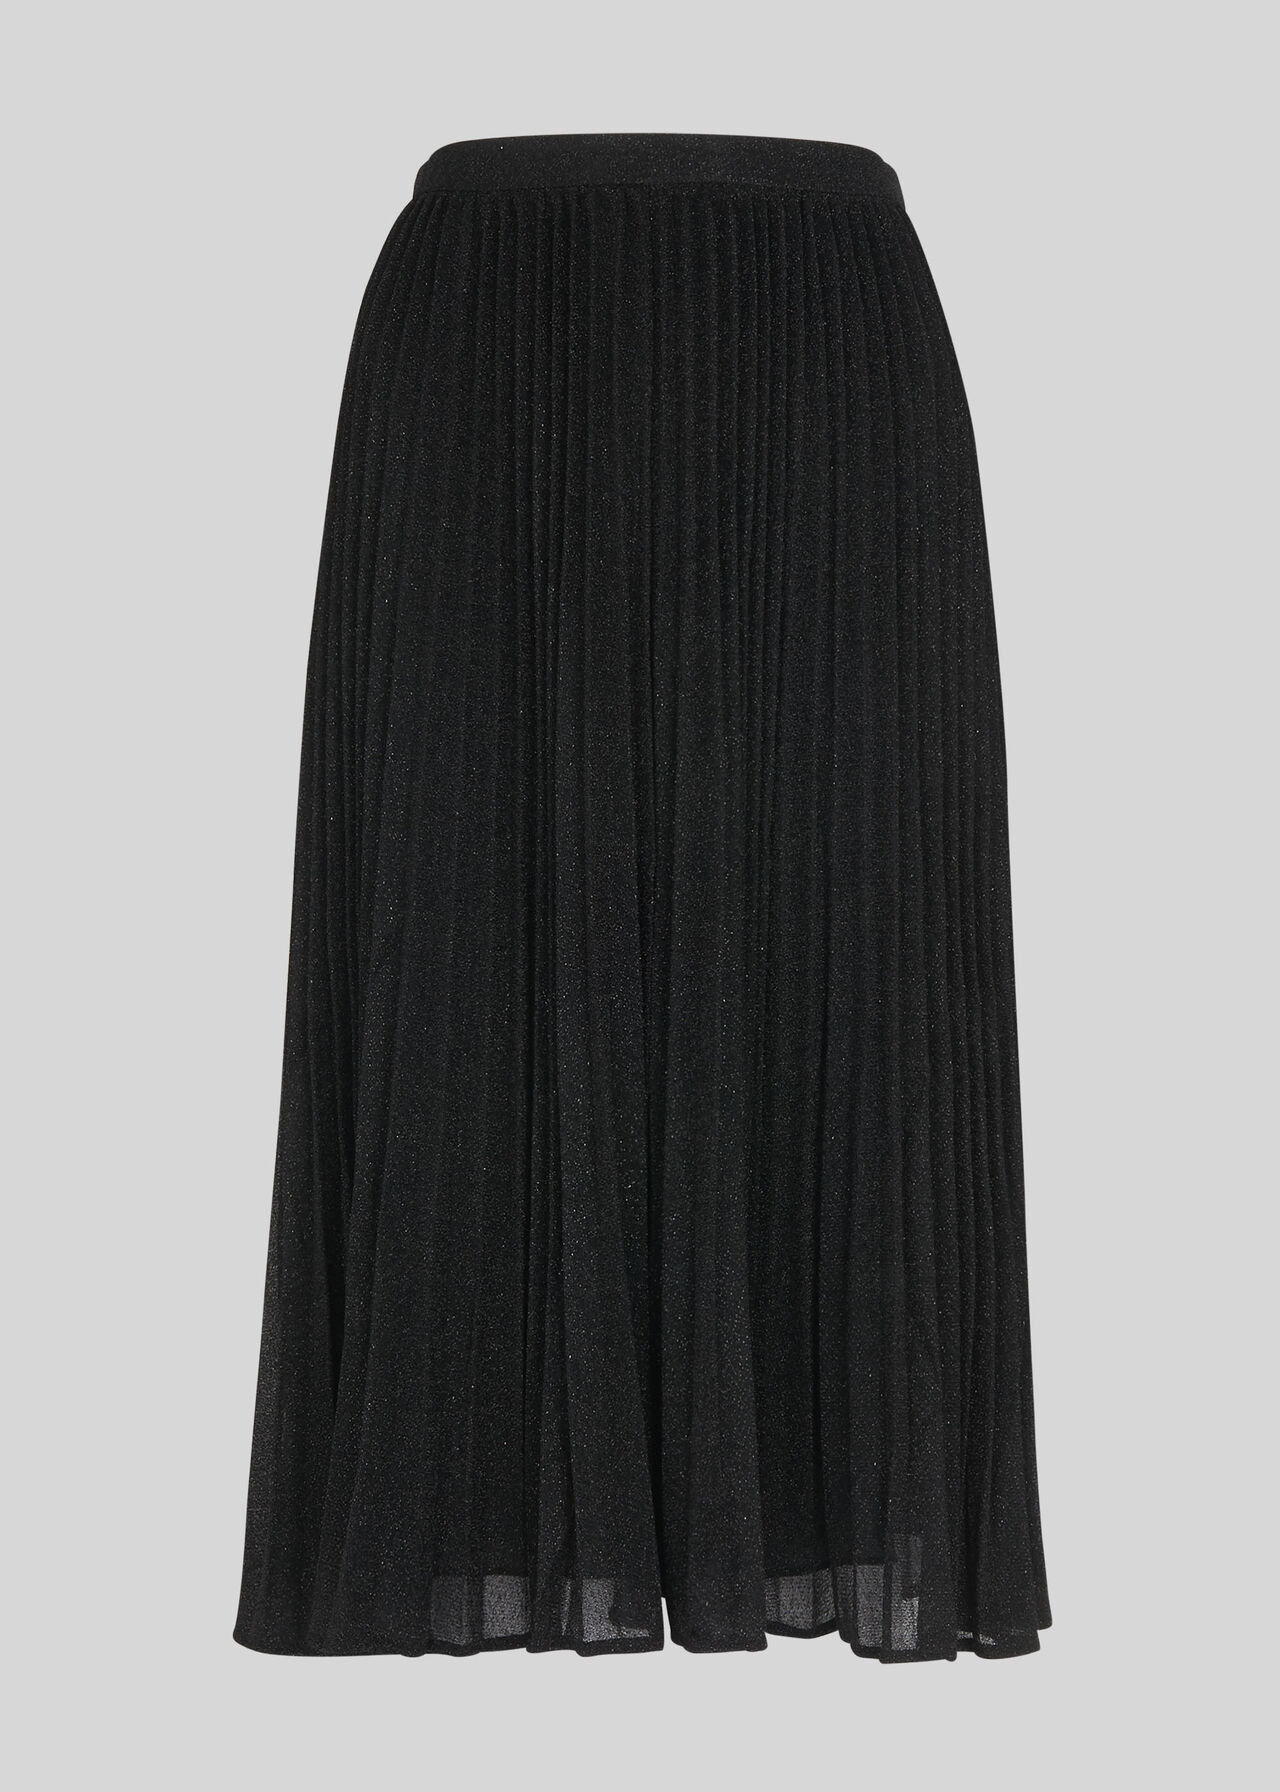 Black Sparkle Pleated Skirt | WHISTLES